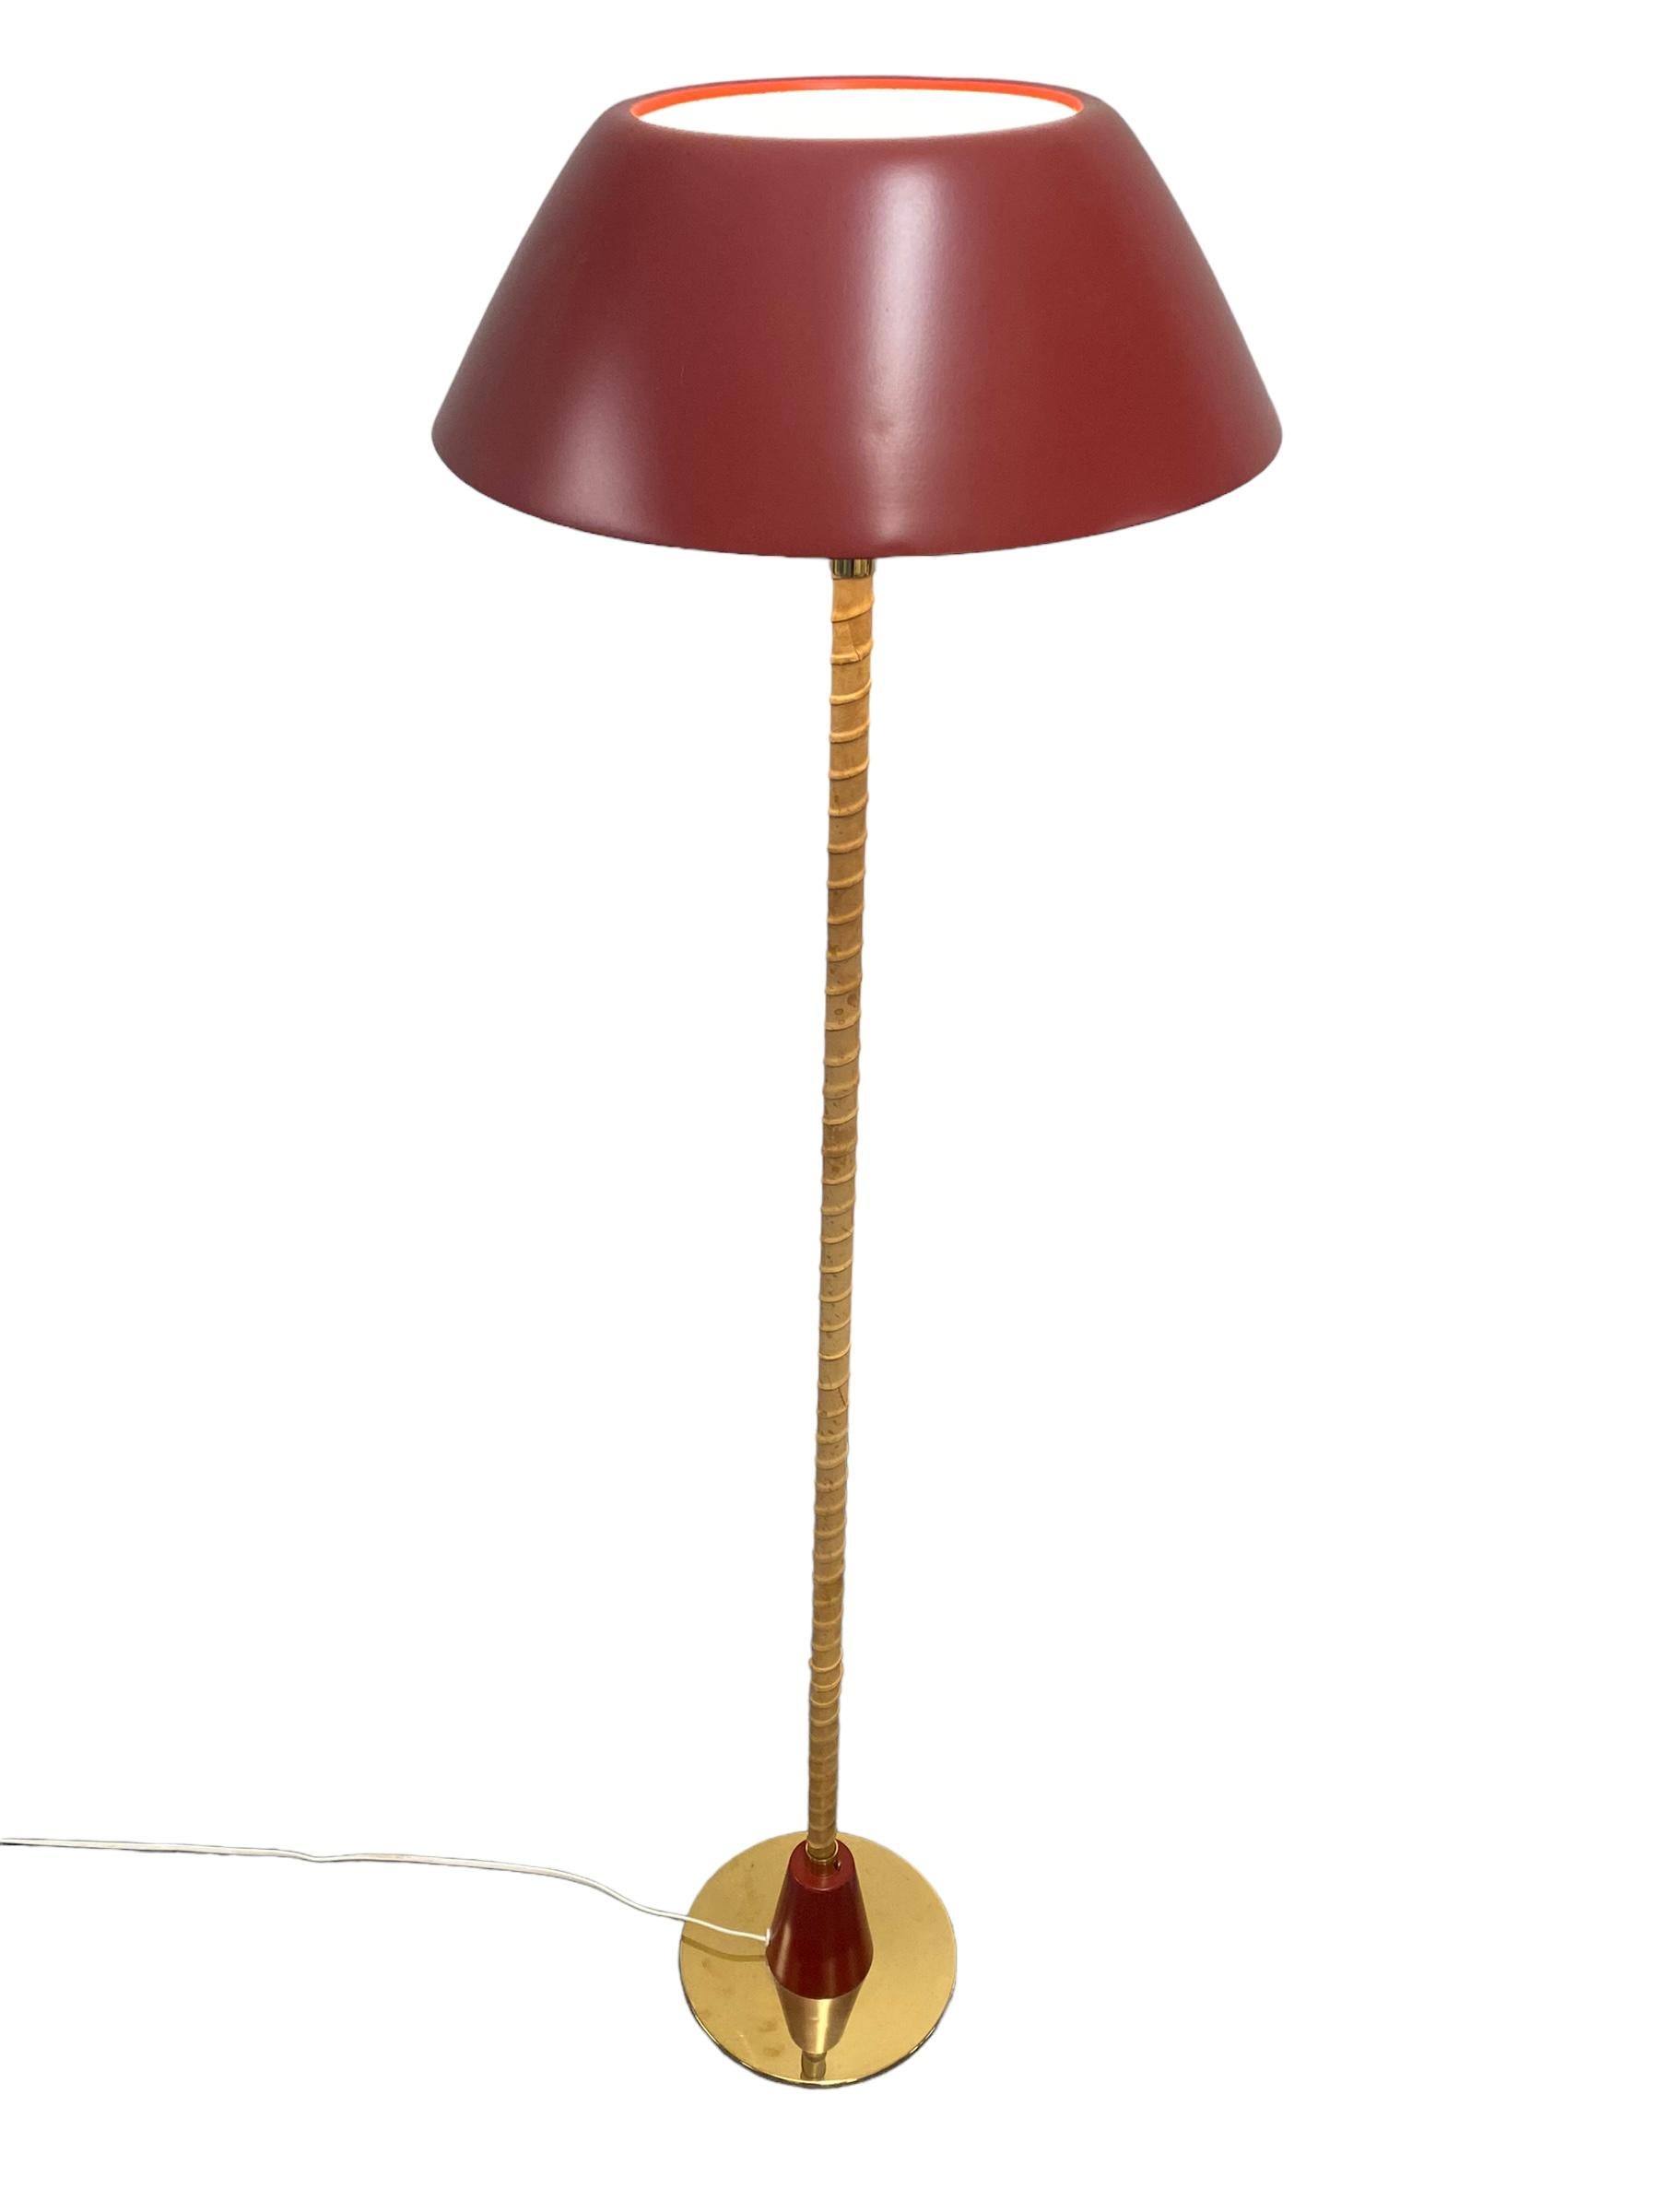 Scandinavian Modern Lisa Johansson-Papé Rare Version of Senator Floor Lamp, Orno  For Sale